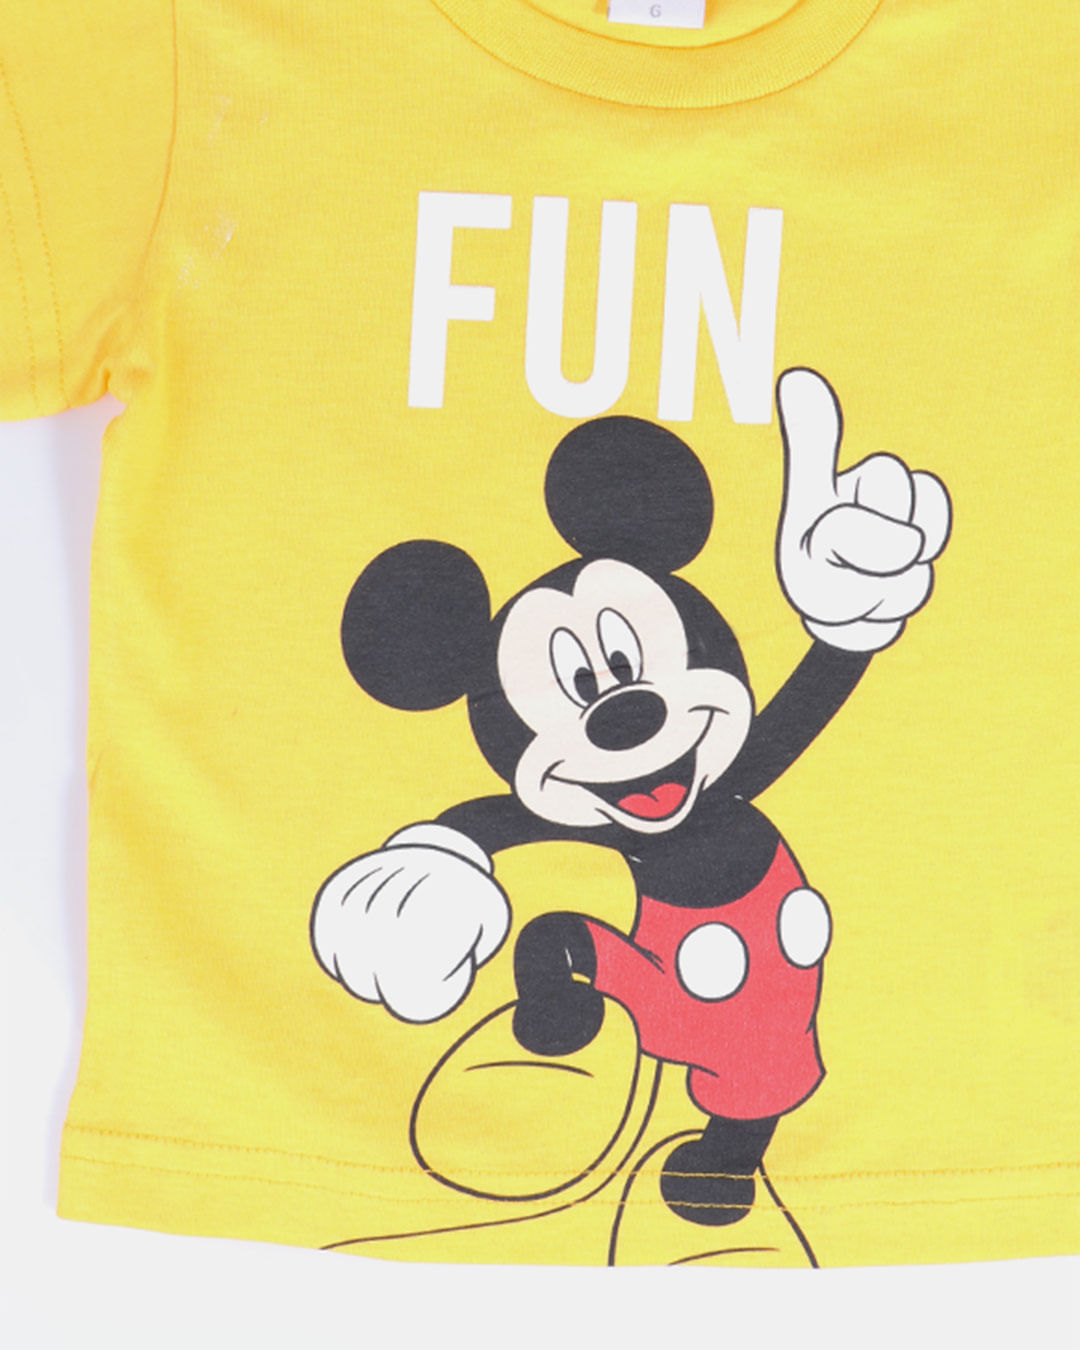 Blusa-Bebe-Mickey-Disney-Amarela